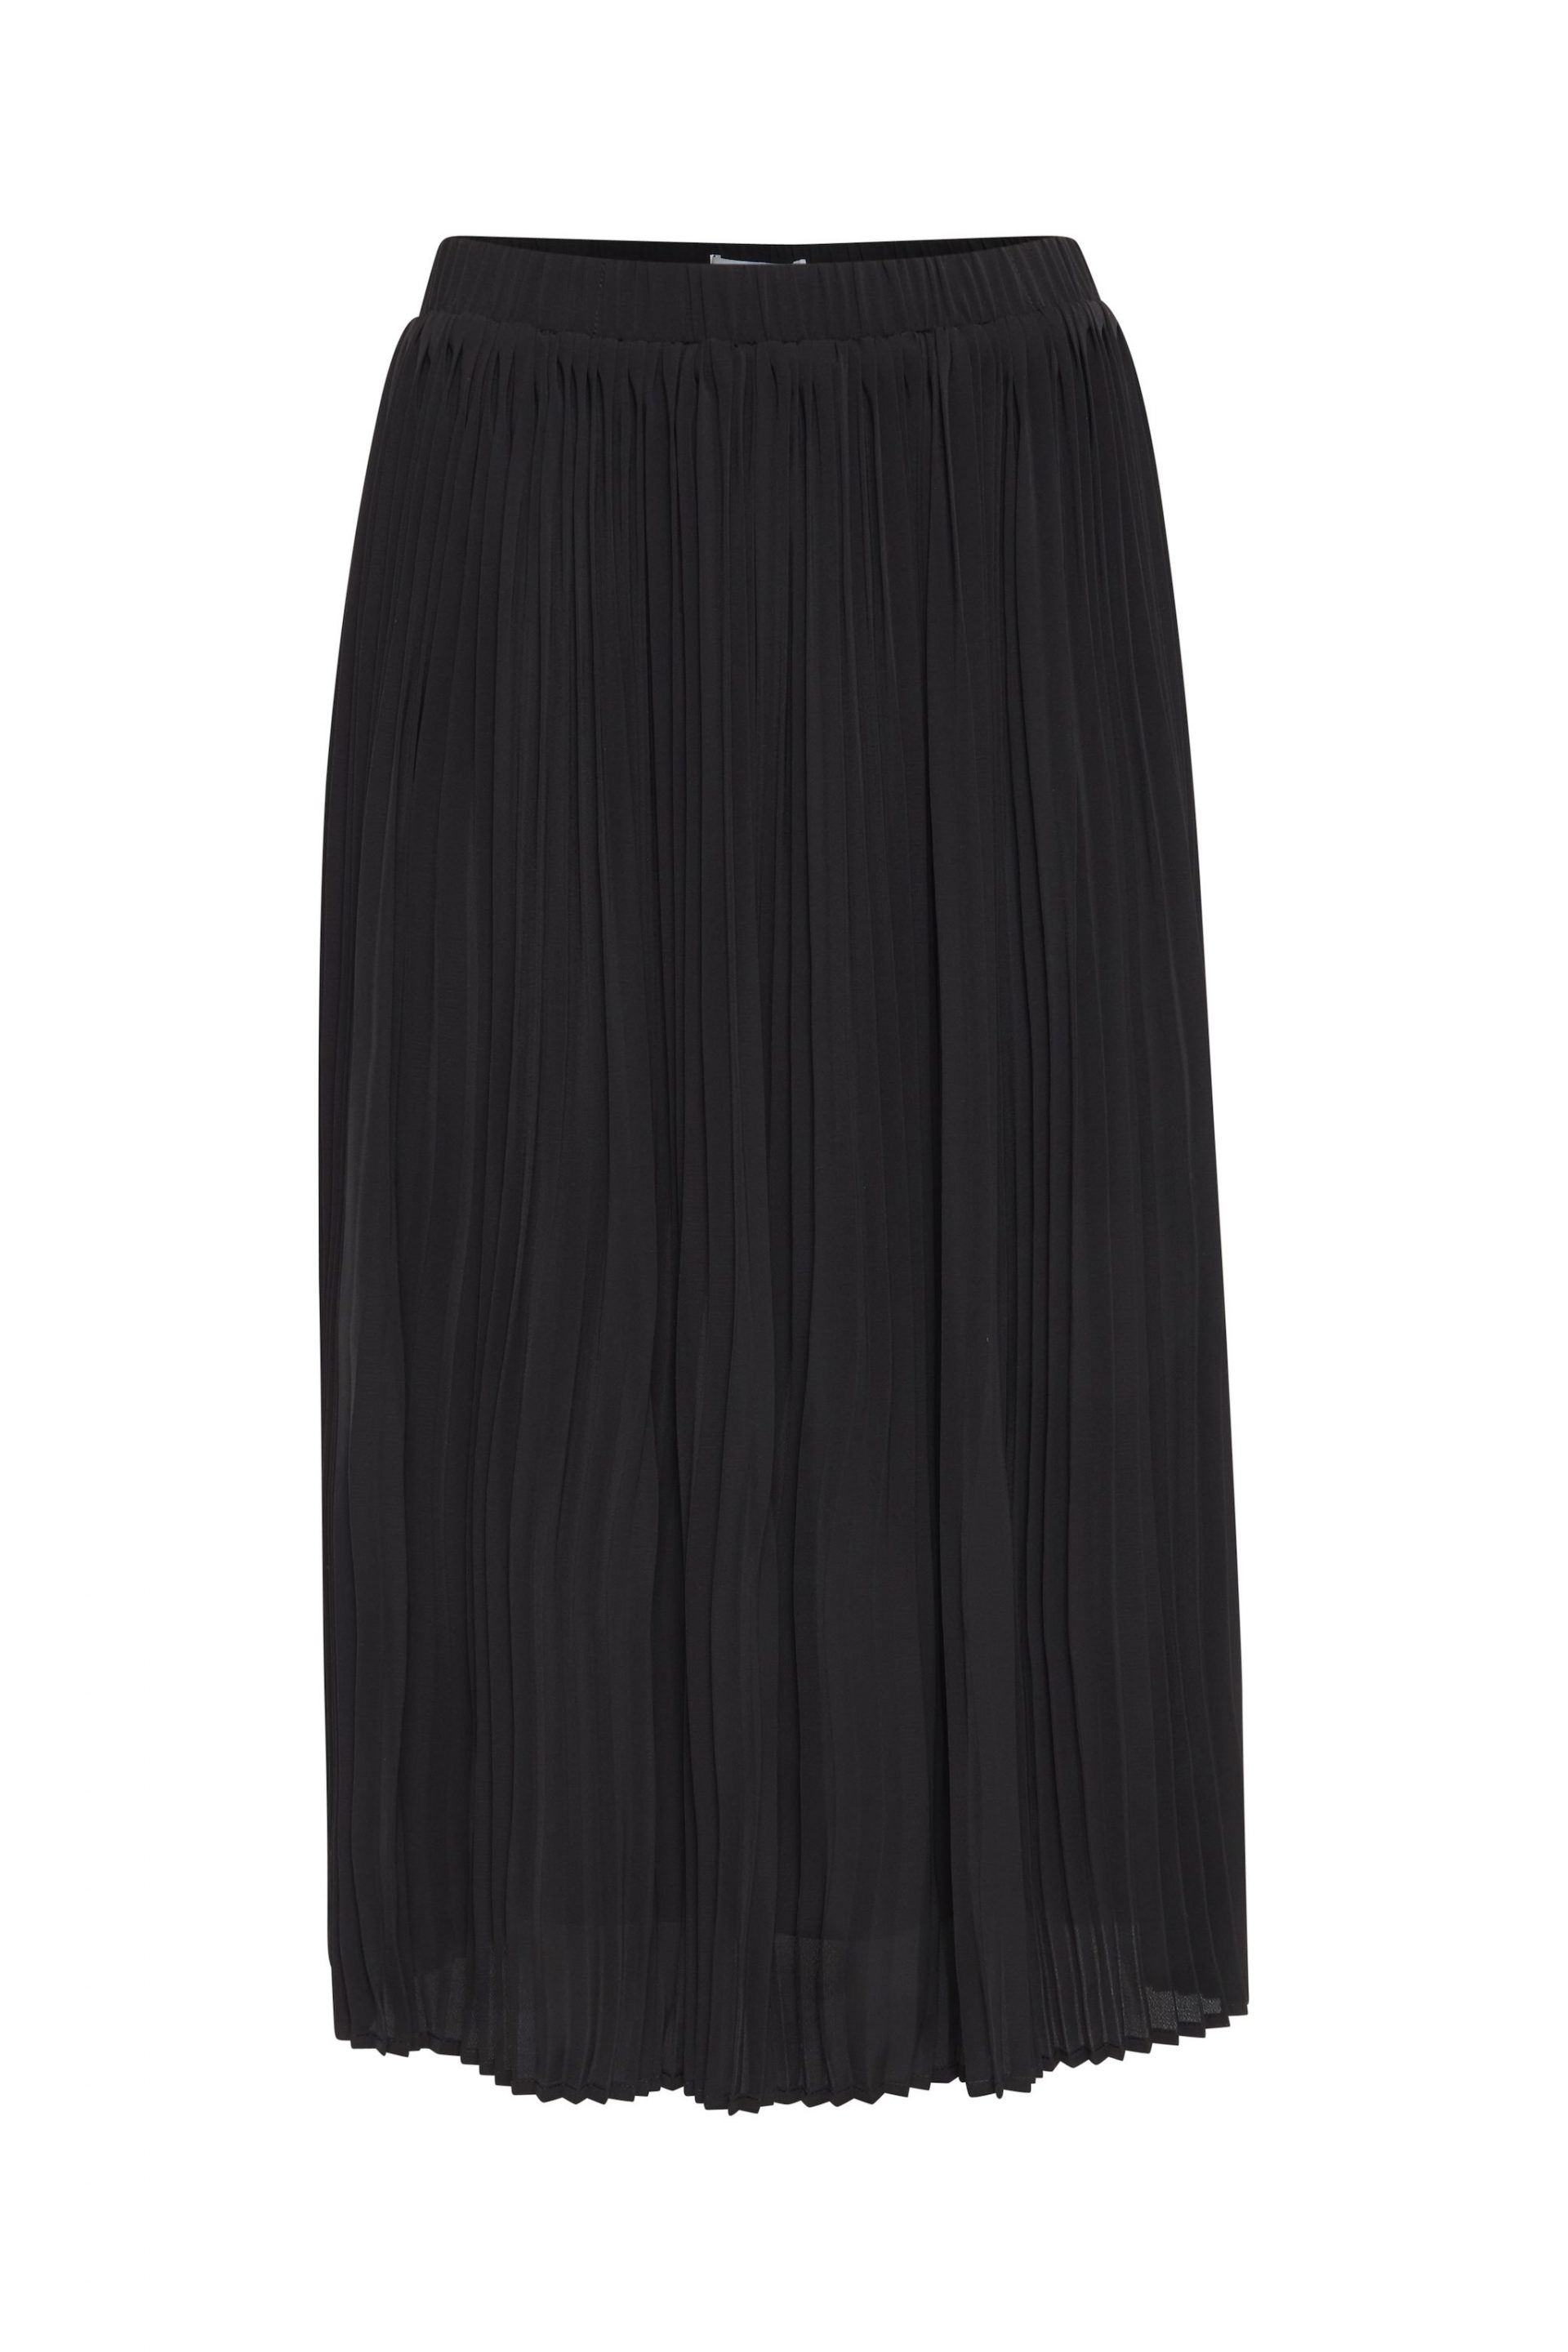 ichi-bellorna-skirt-black-20113687_1